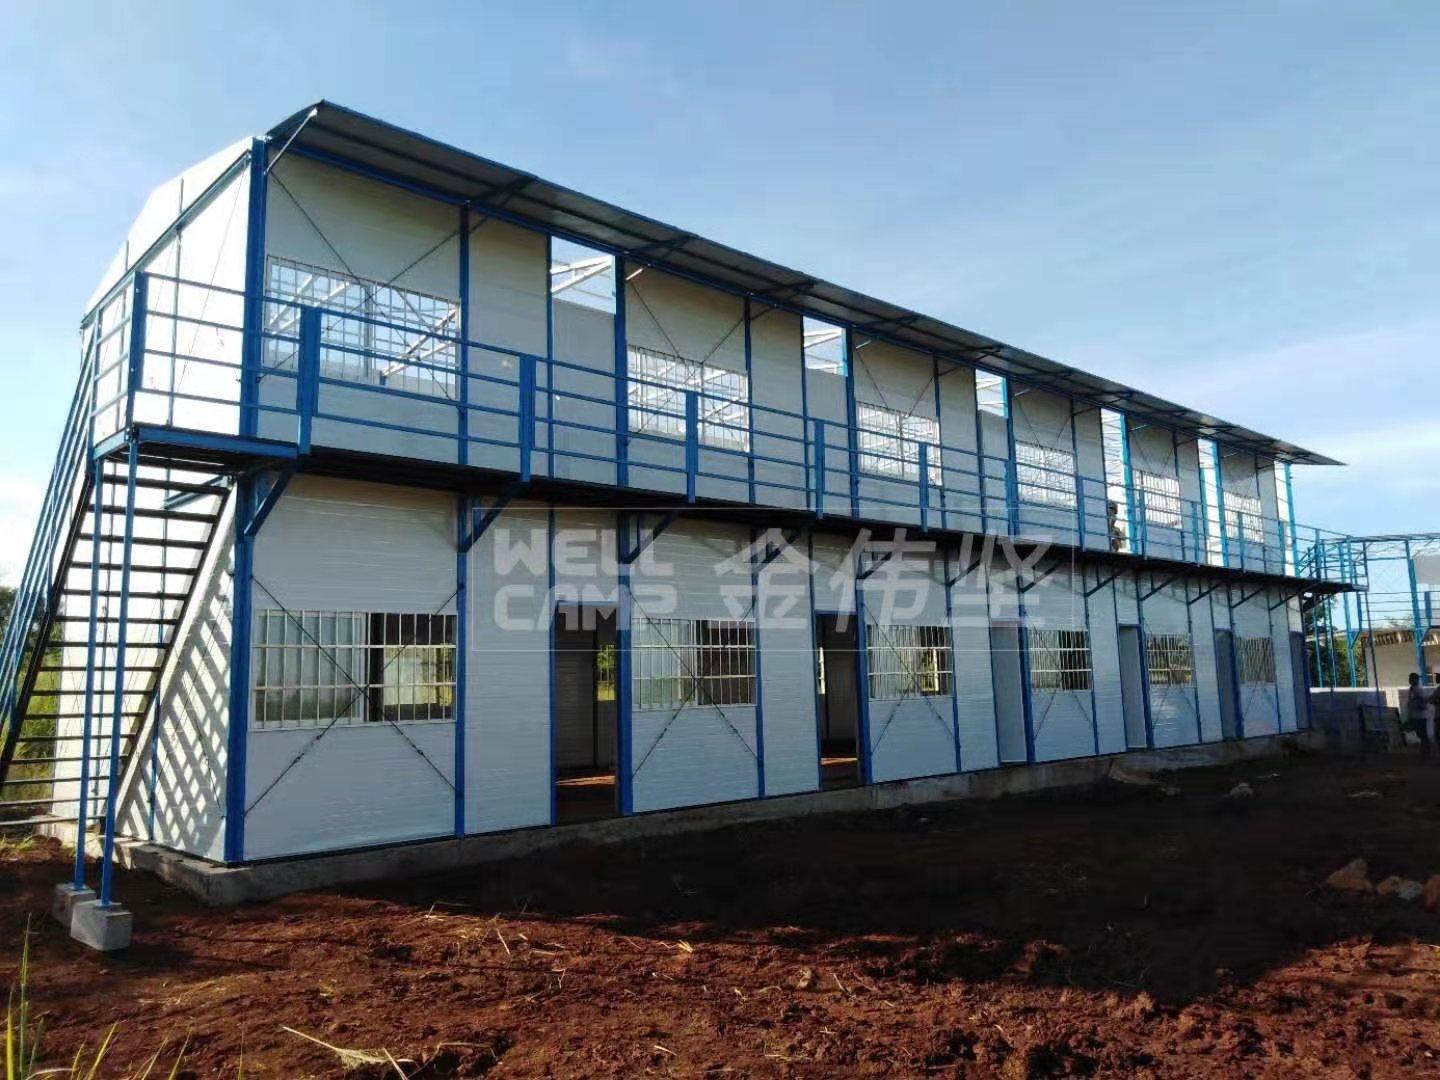 WELLCAMP modular prefabricated houses for knockdown house labor camp easy assemble prefab K house